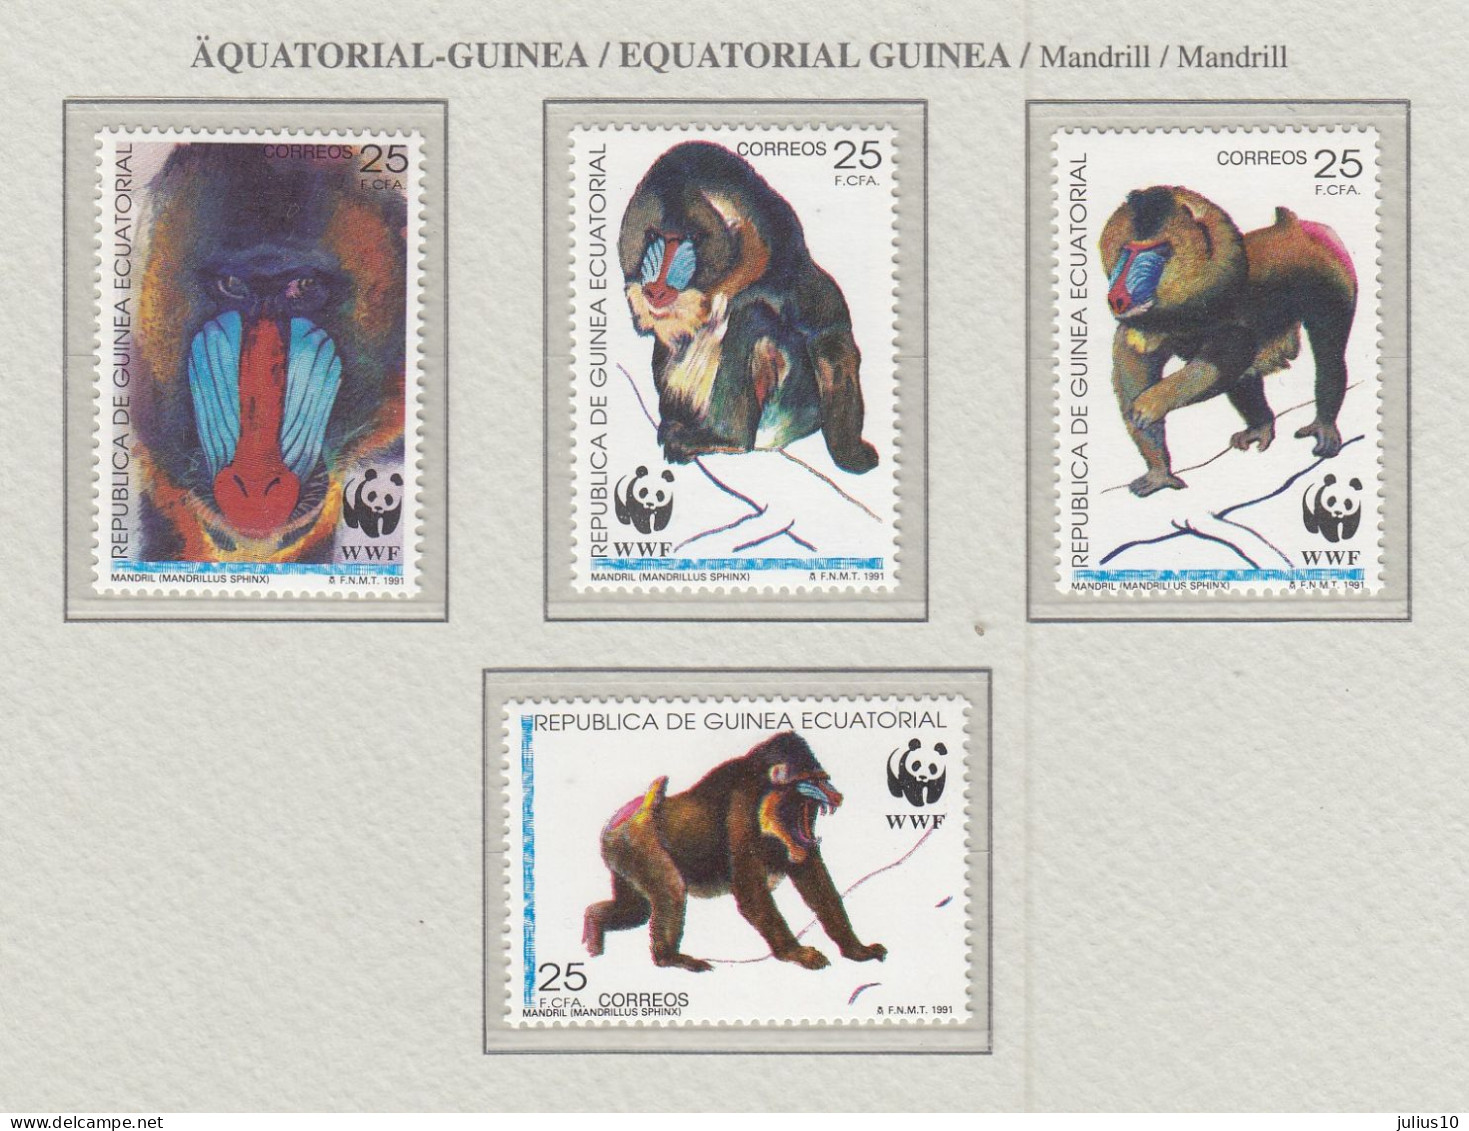 EQUATORIAL GUINEA 1991 WWF Monkeys Mandrill MNH(**) Fauna 797 - Singes